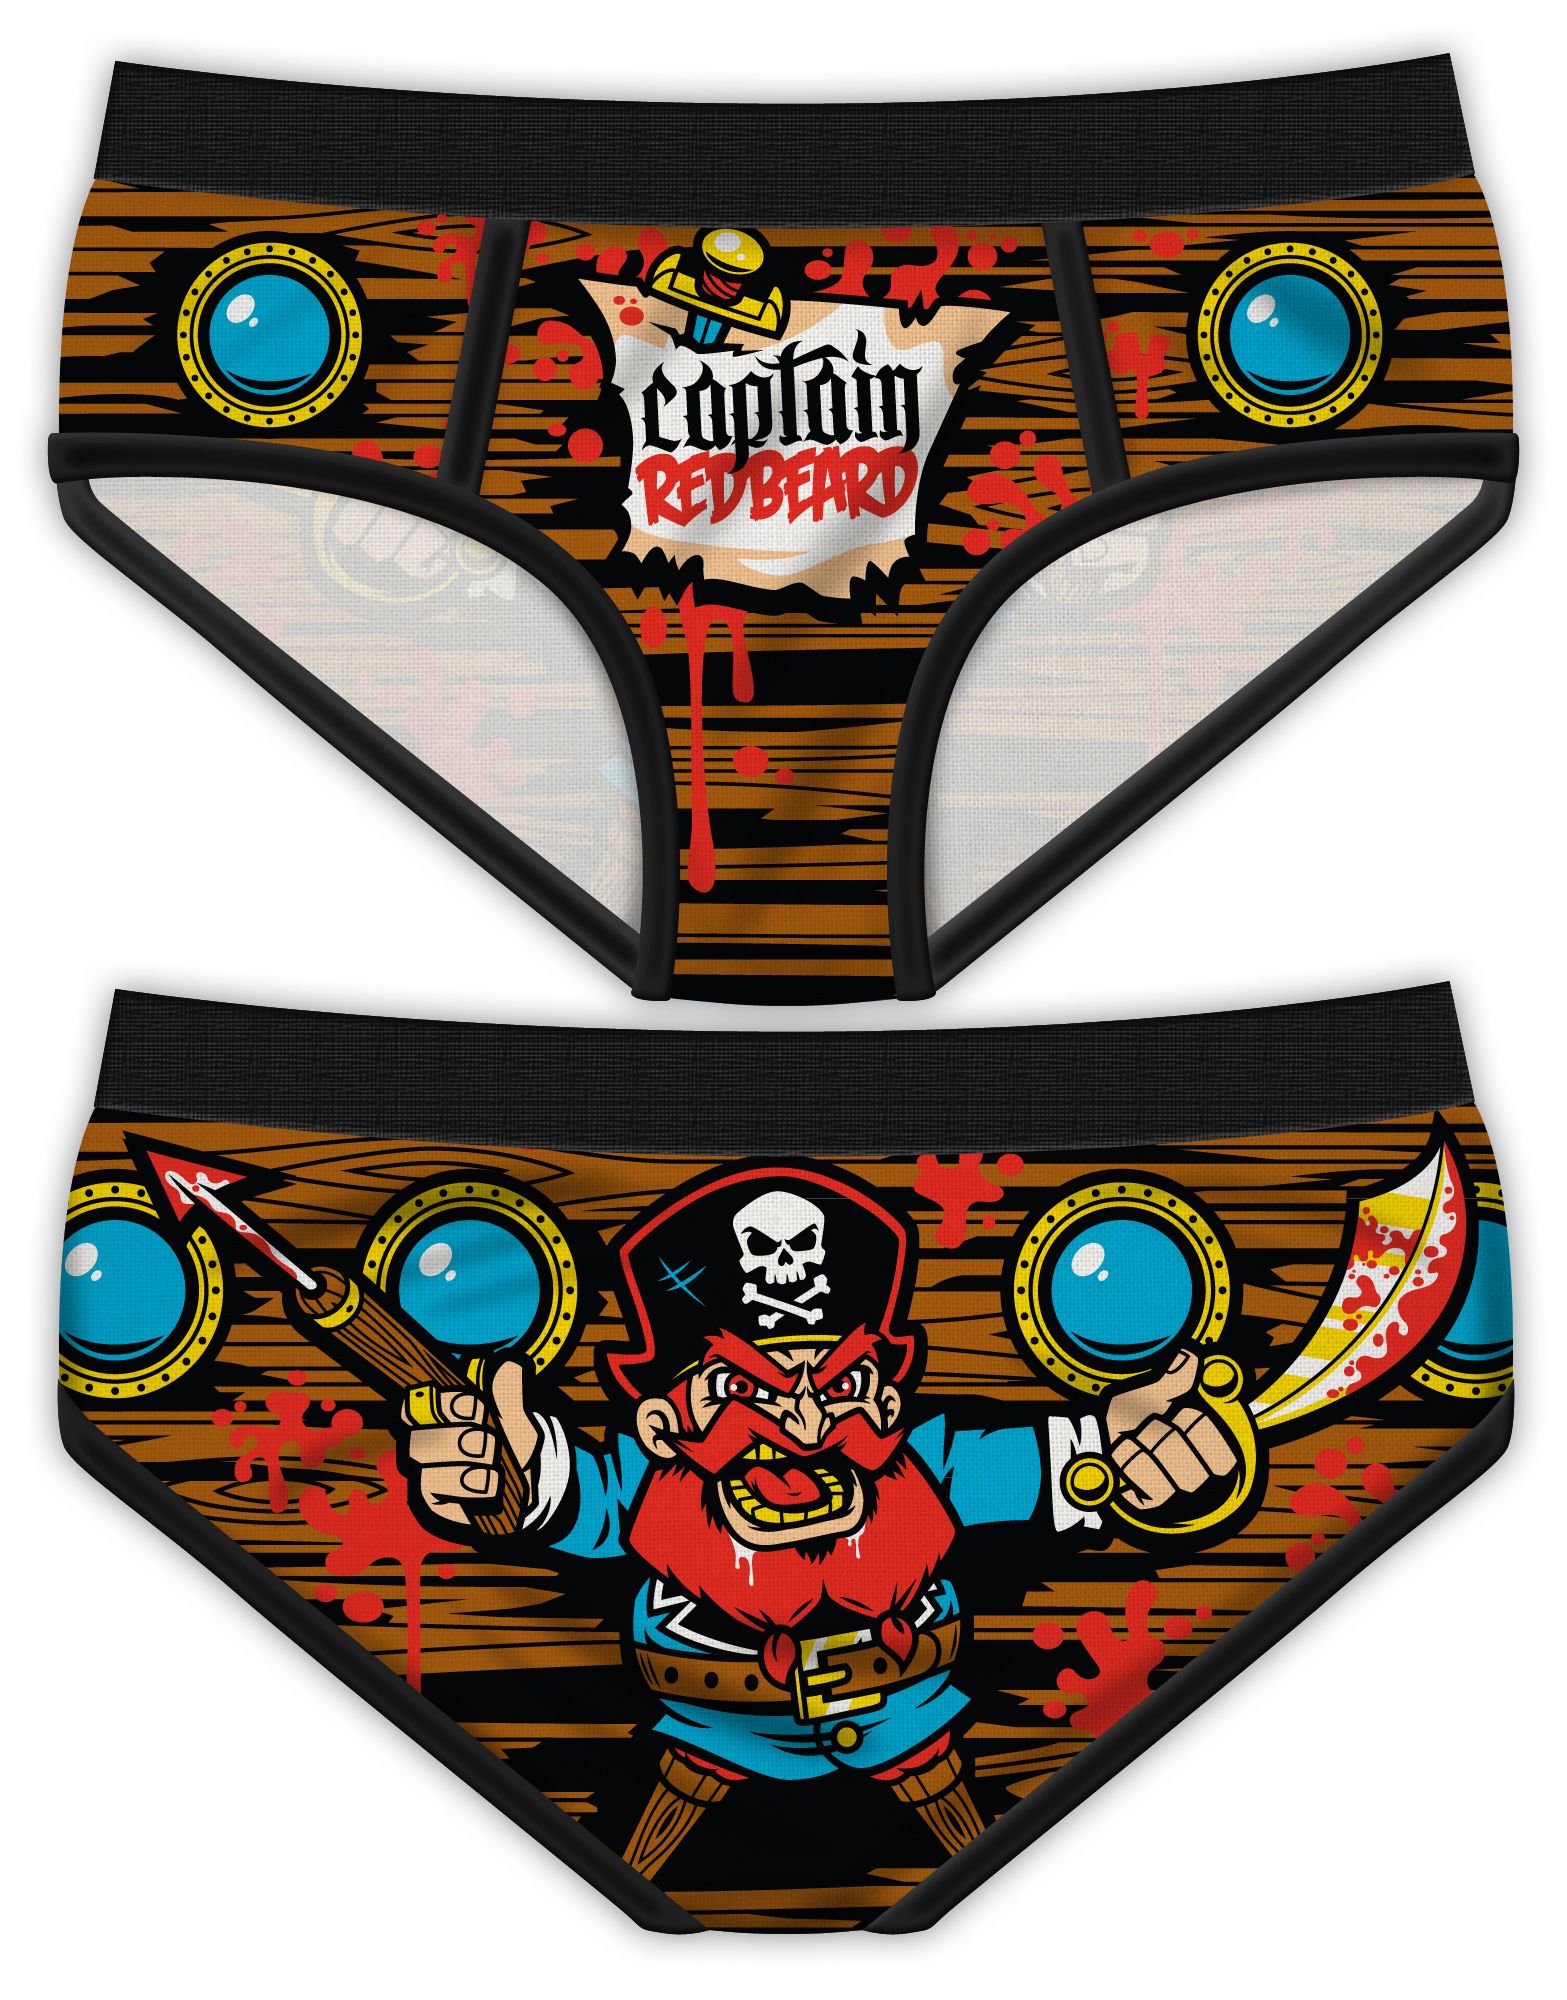 Harebrained Period Panties - Captain Redbeard Pirate Themed Underwear -  XXXL